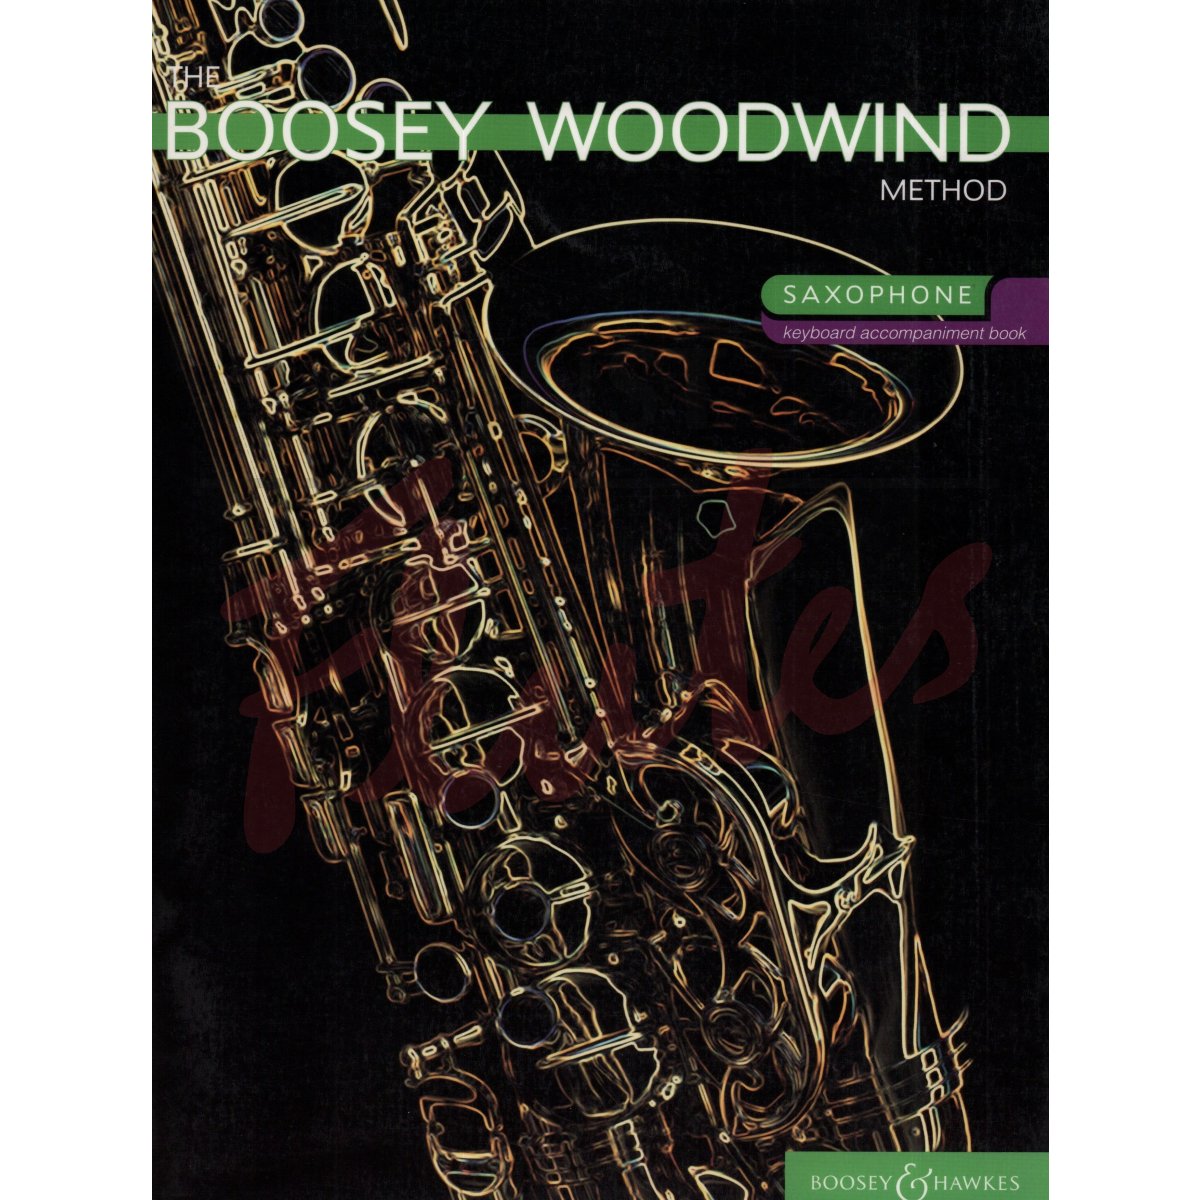 The Boosey Woodwind Method [Alto Sax] Piano Accompaniment